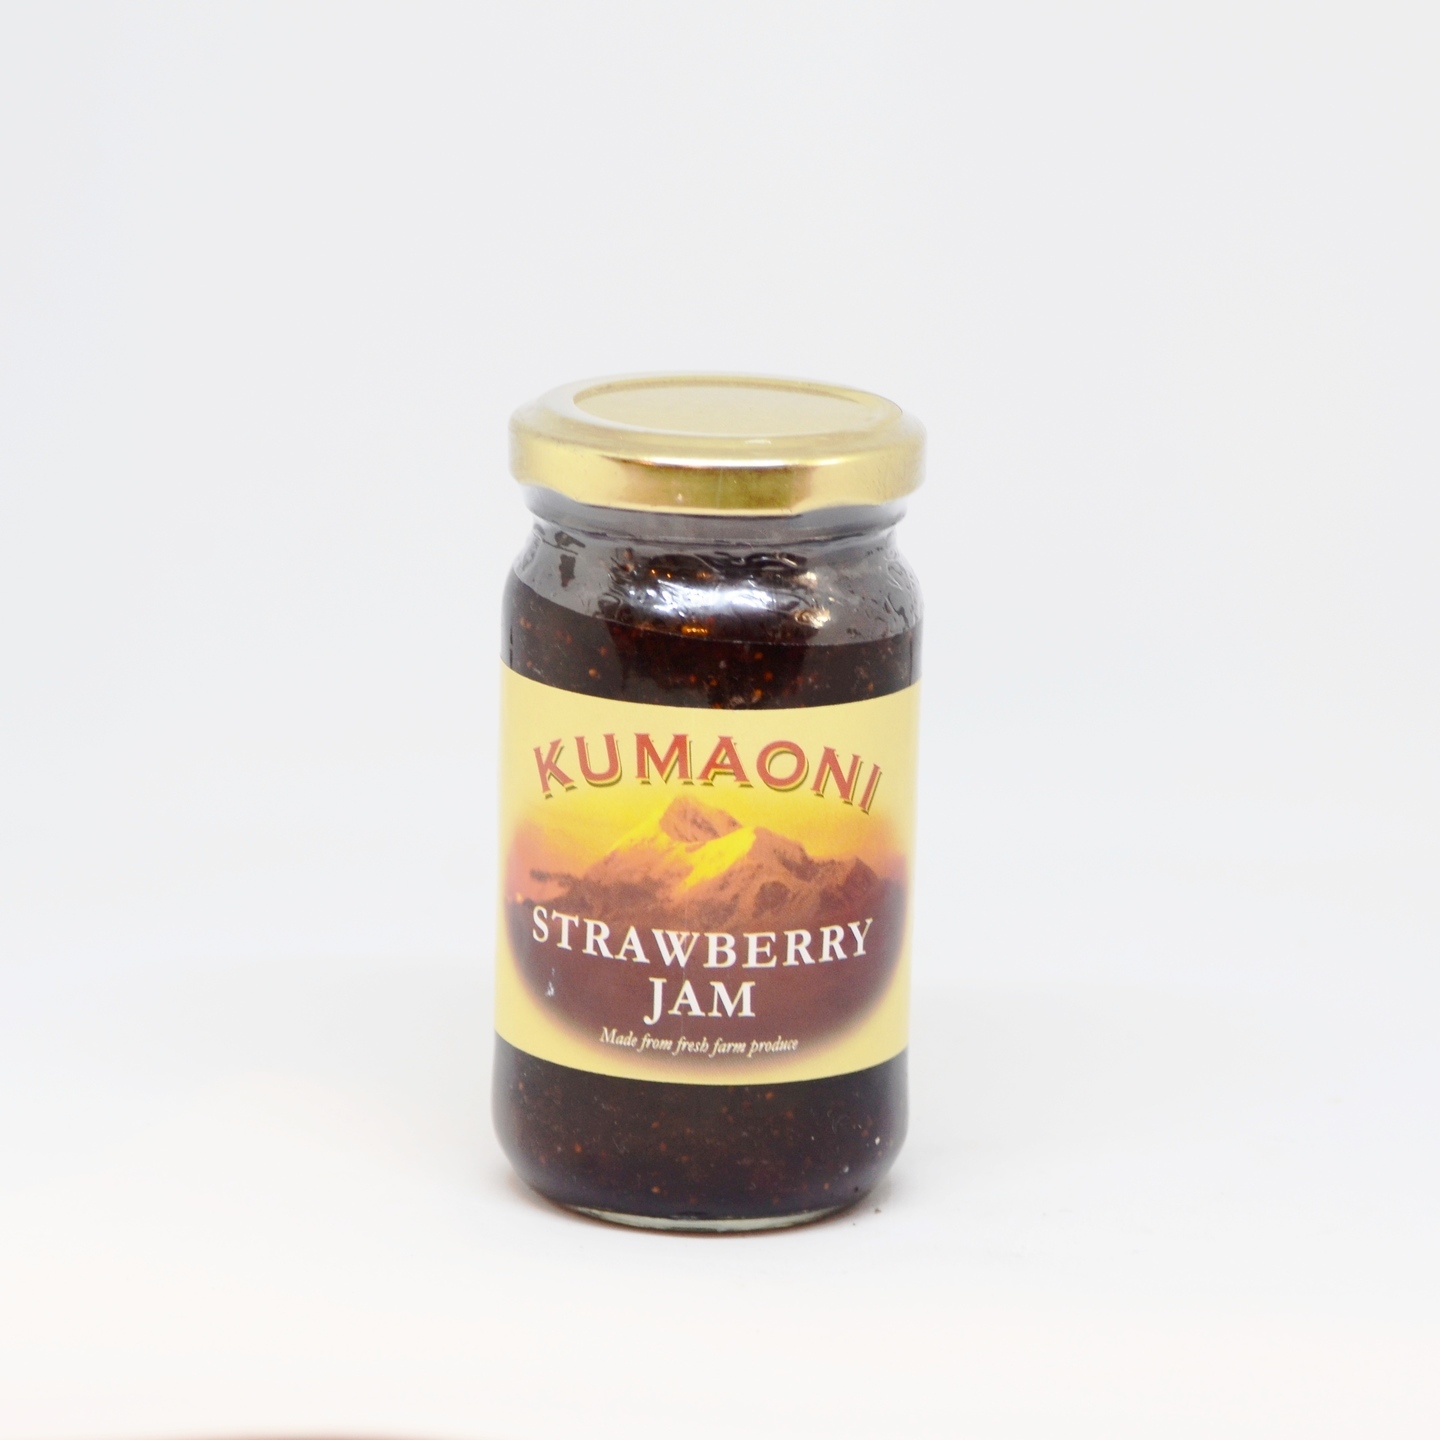 Kumaoni Strawberry Jam 250g